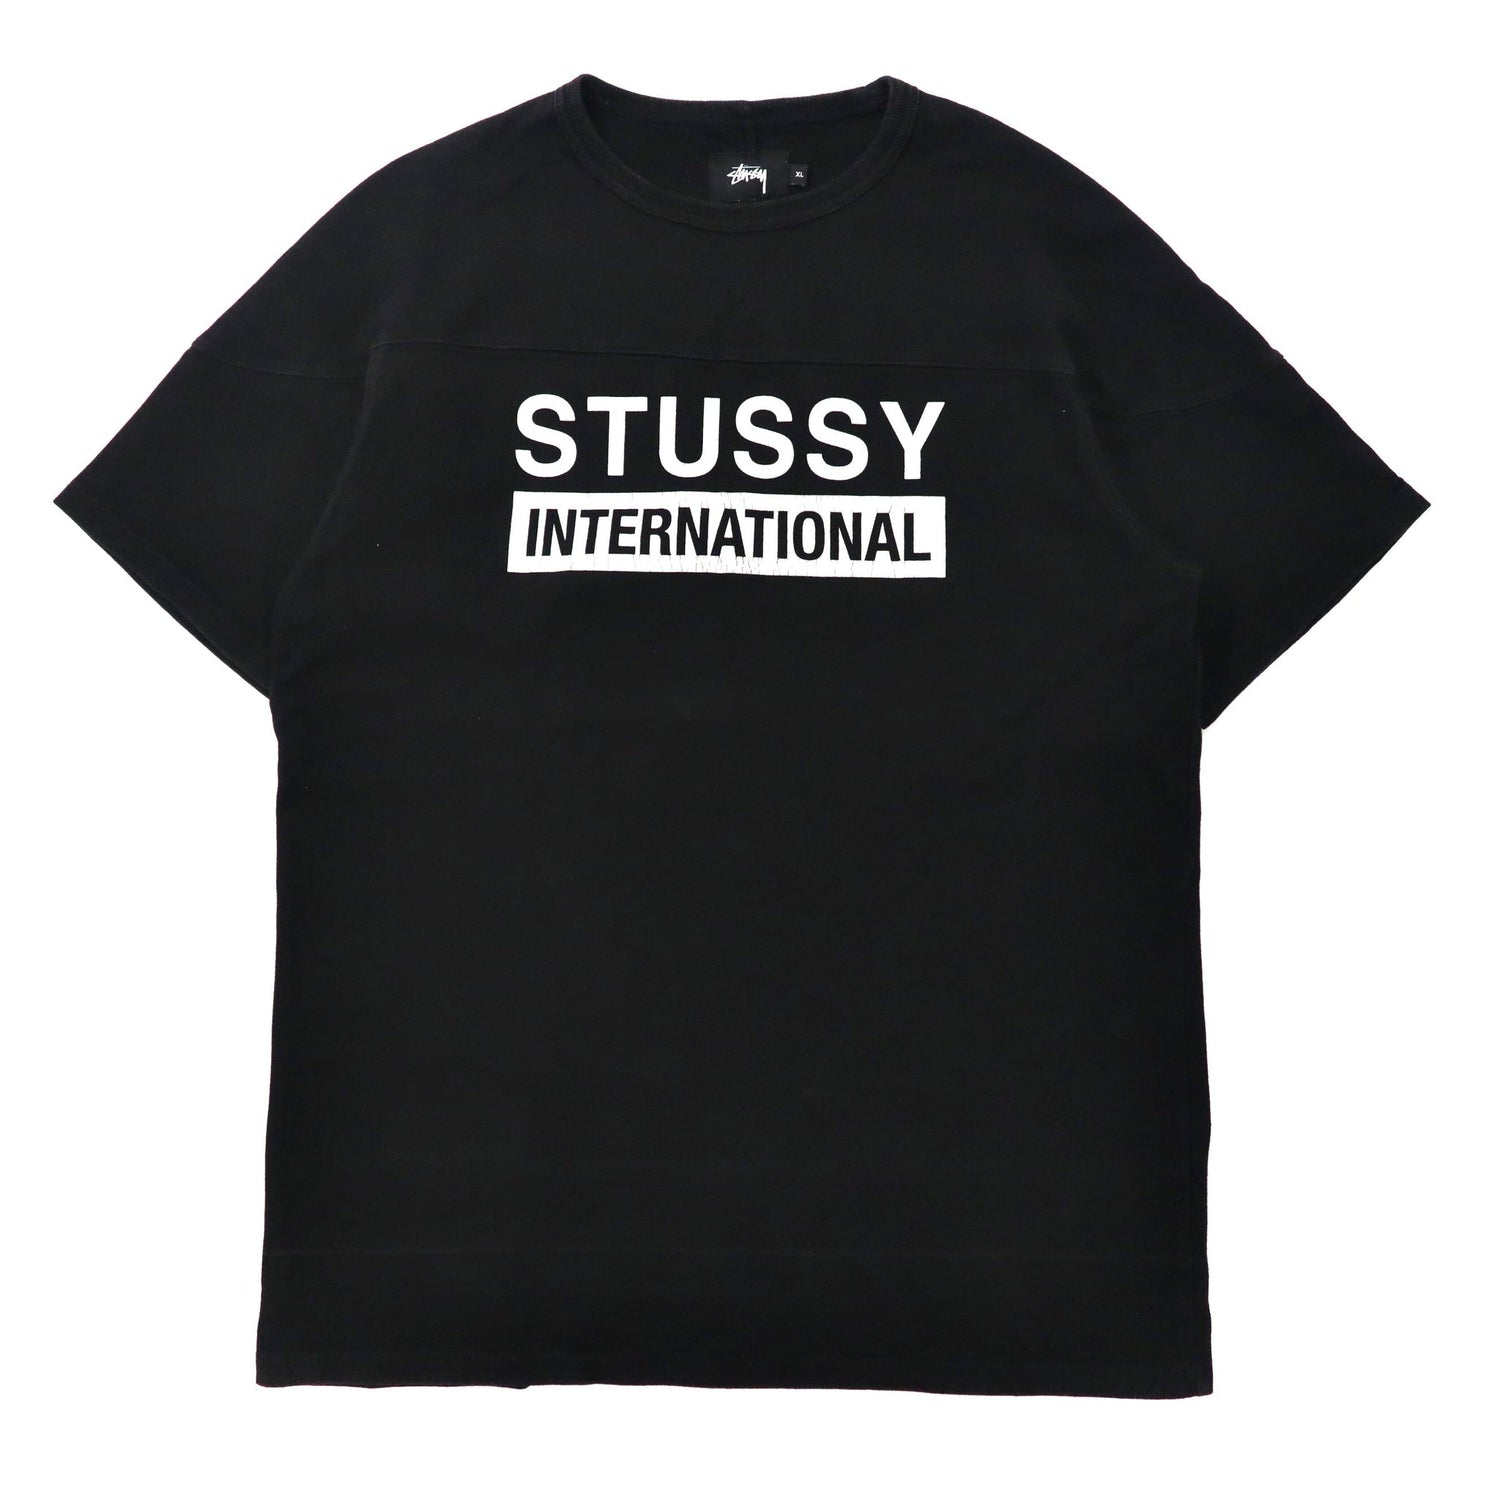 Stussy Big Size Logo Tee T-Shirt XL Black Cotton Heavy Weight